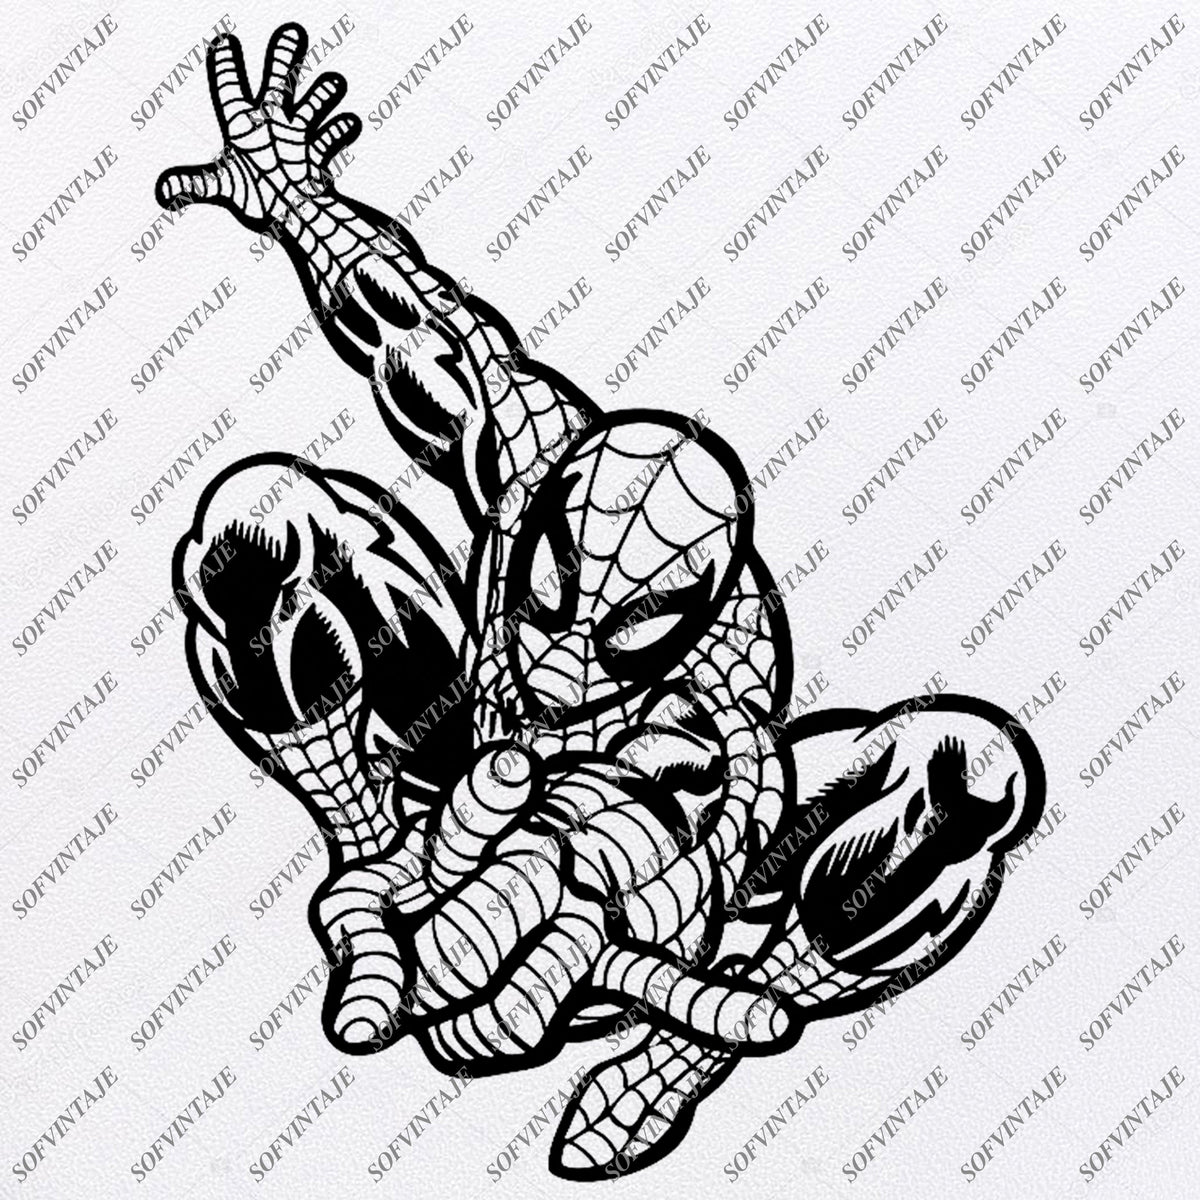 Superhero Marvel Puzzle 1000 Pieces Spider-man Action 